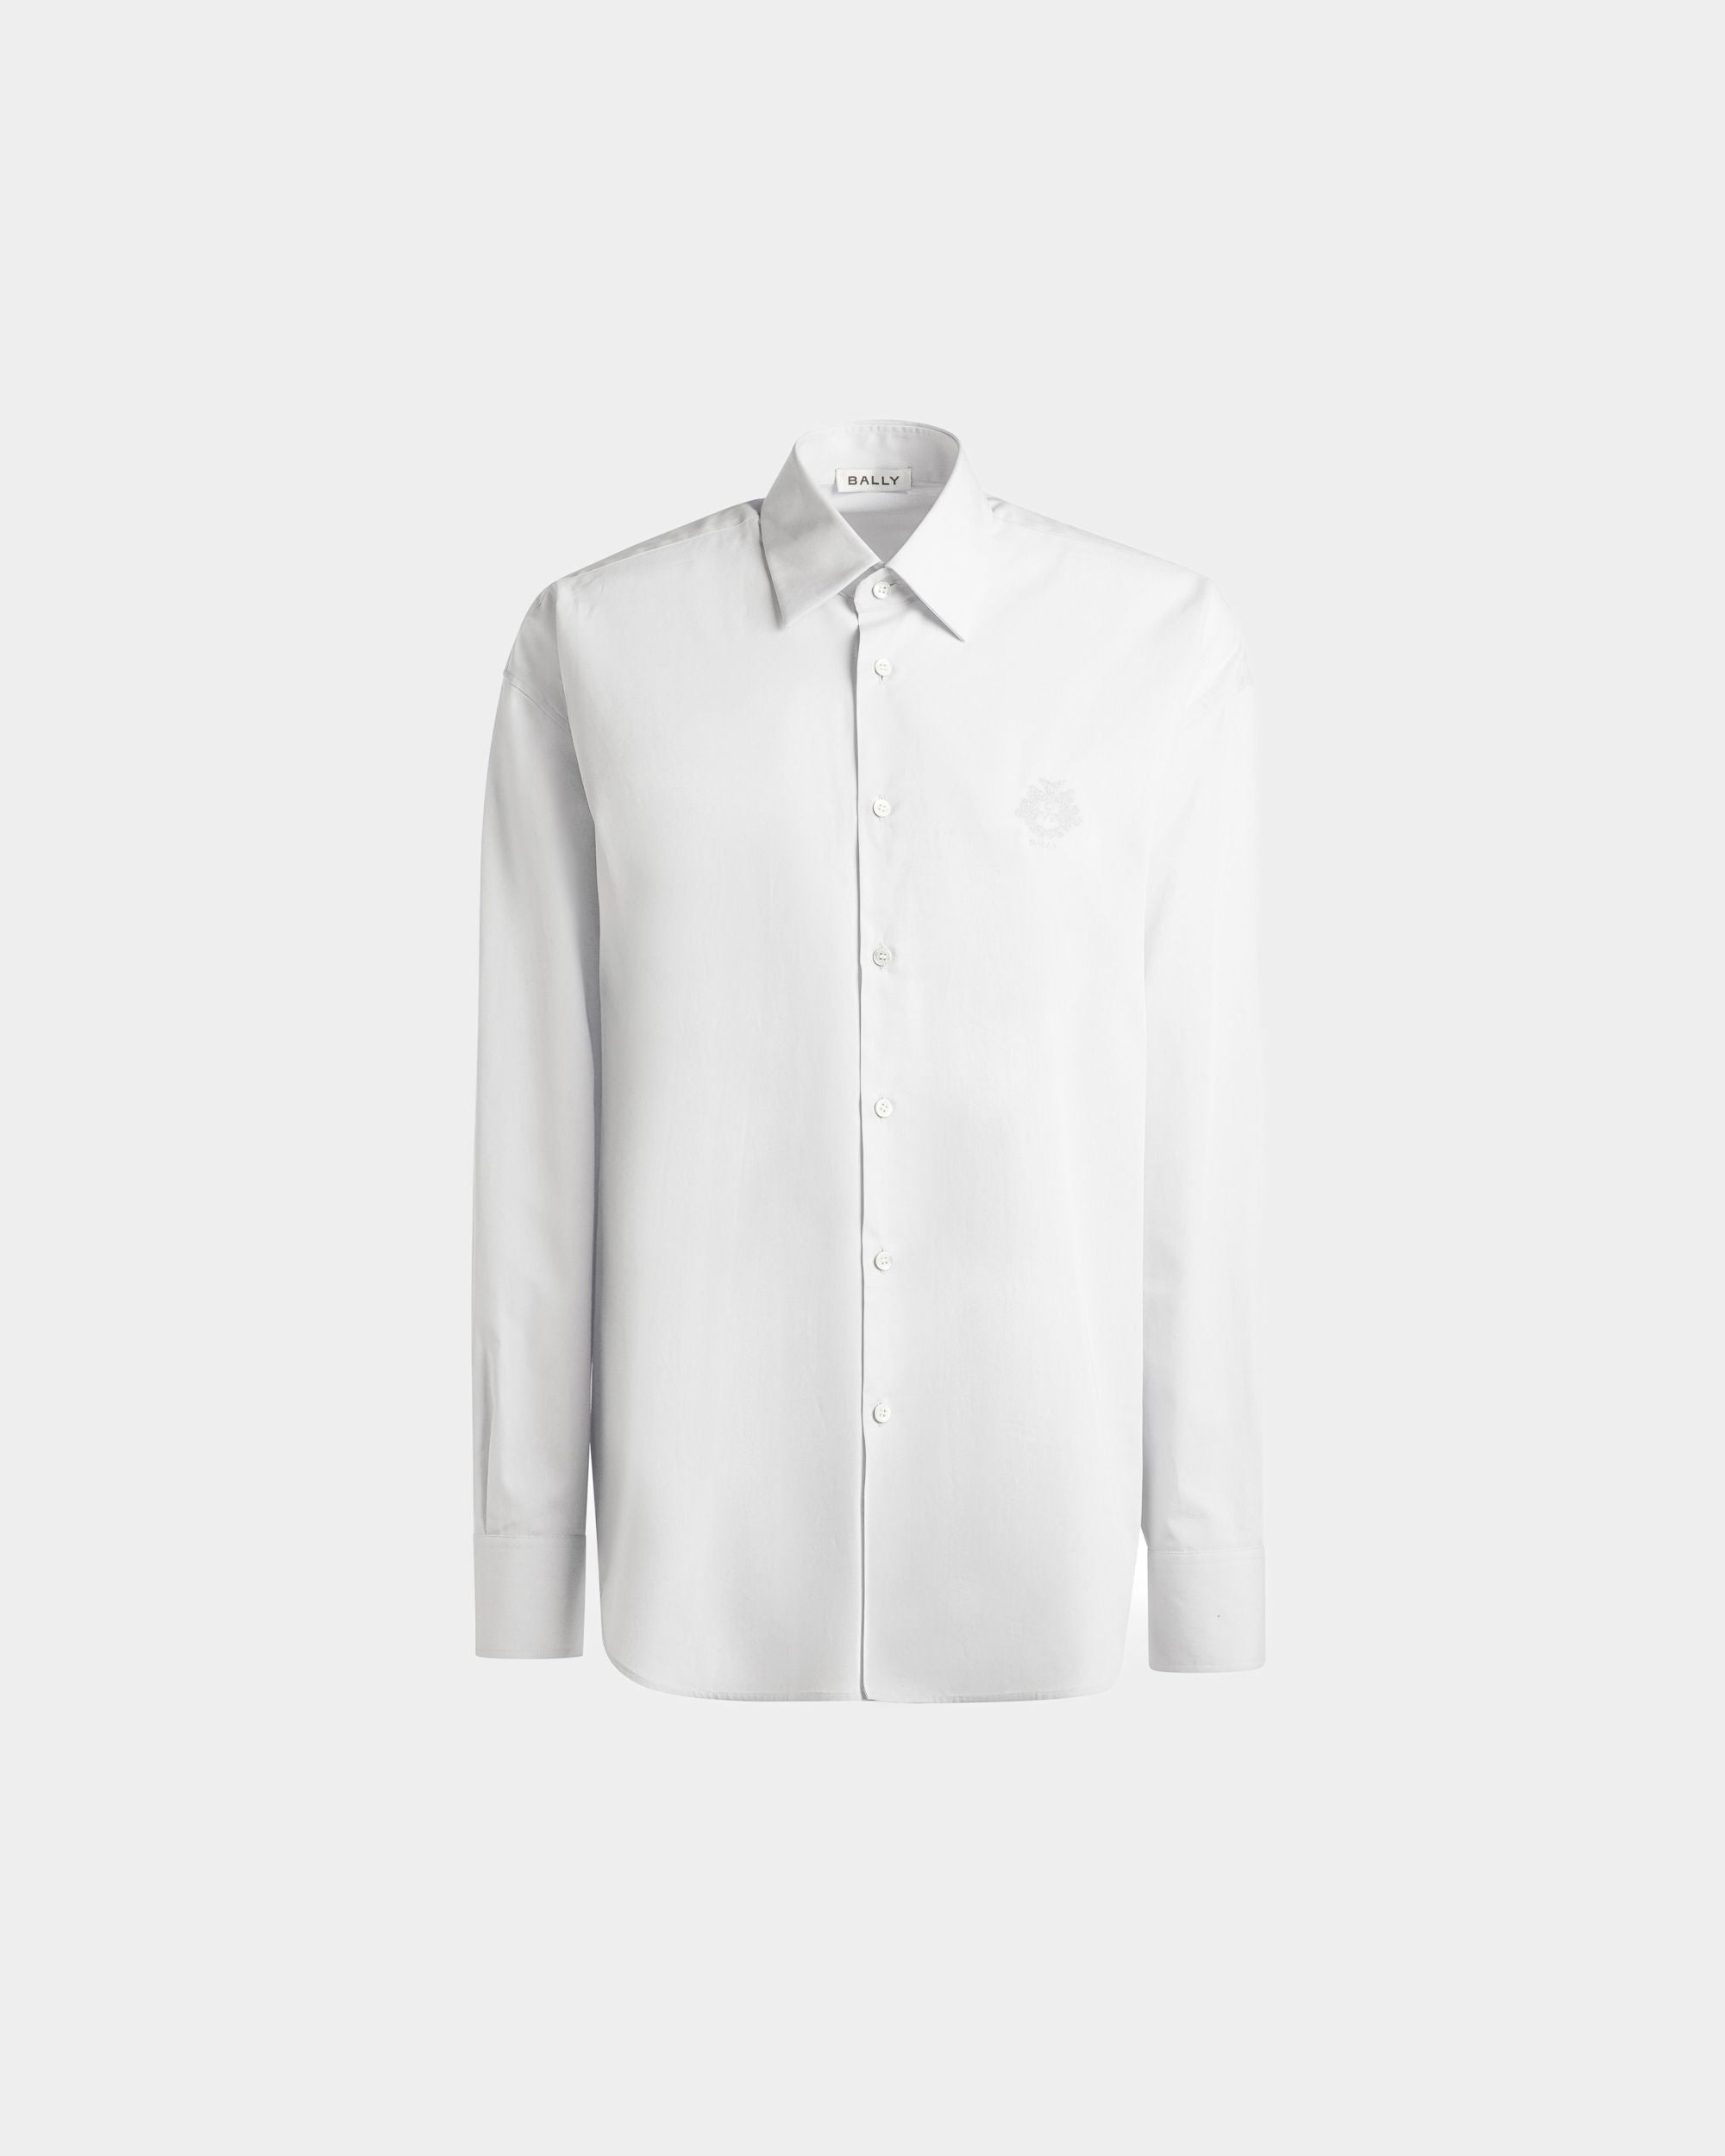 Men's Shirt in White Cotton | Bally | Still Life Front